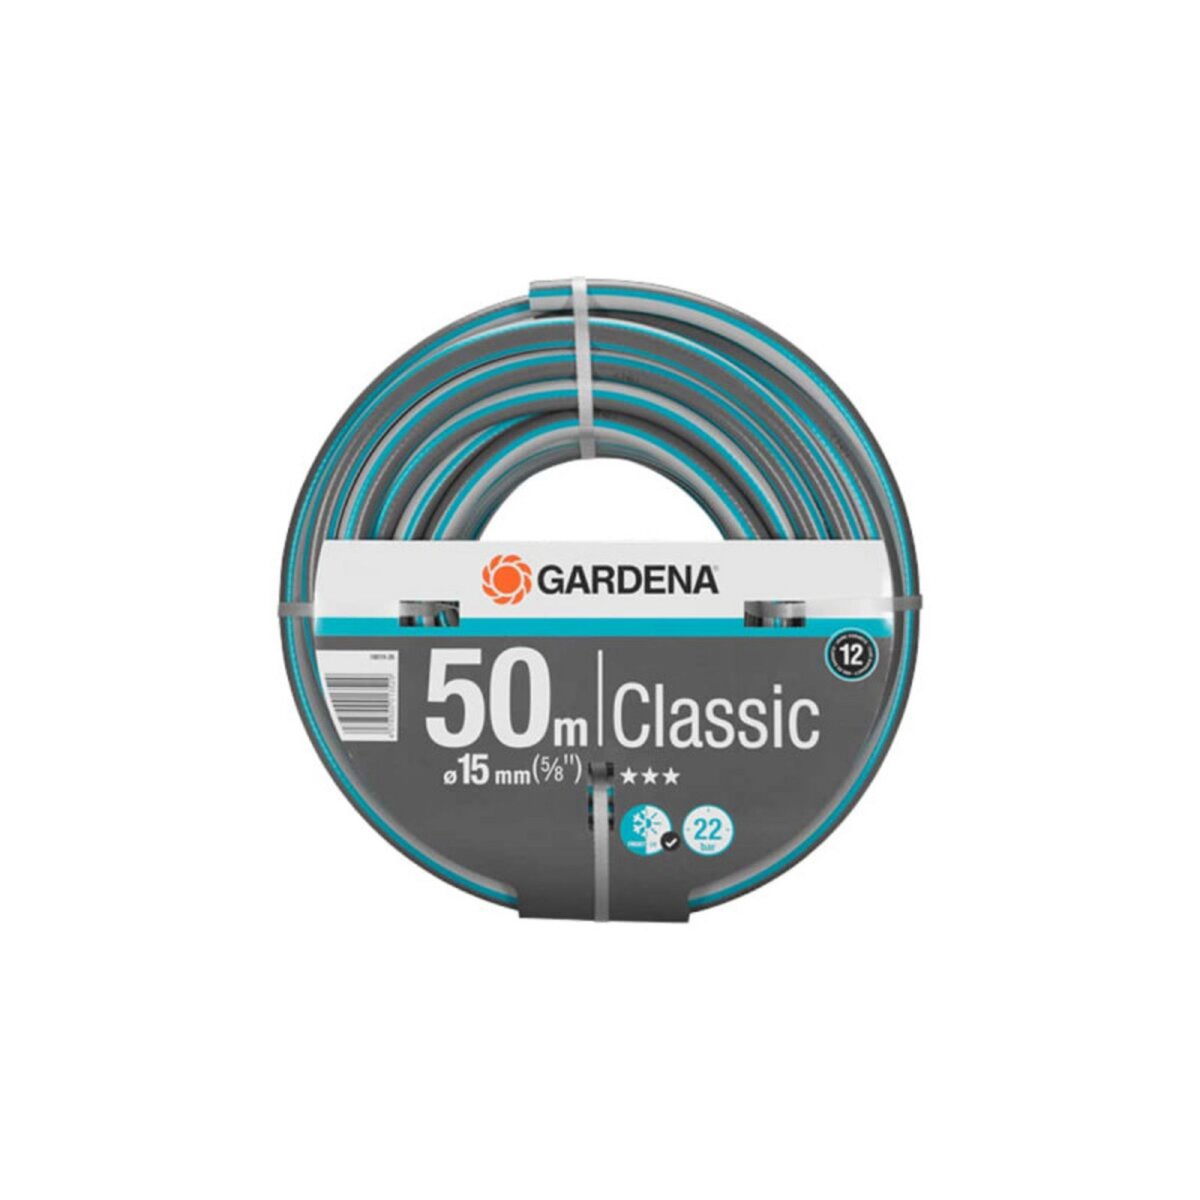 Gardena Tuyau classic GARDENA - diamètre 15mm - 50m 18019-26